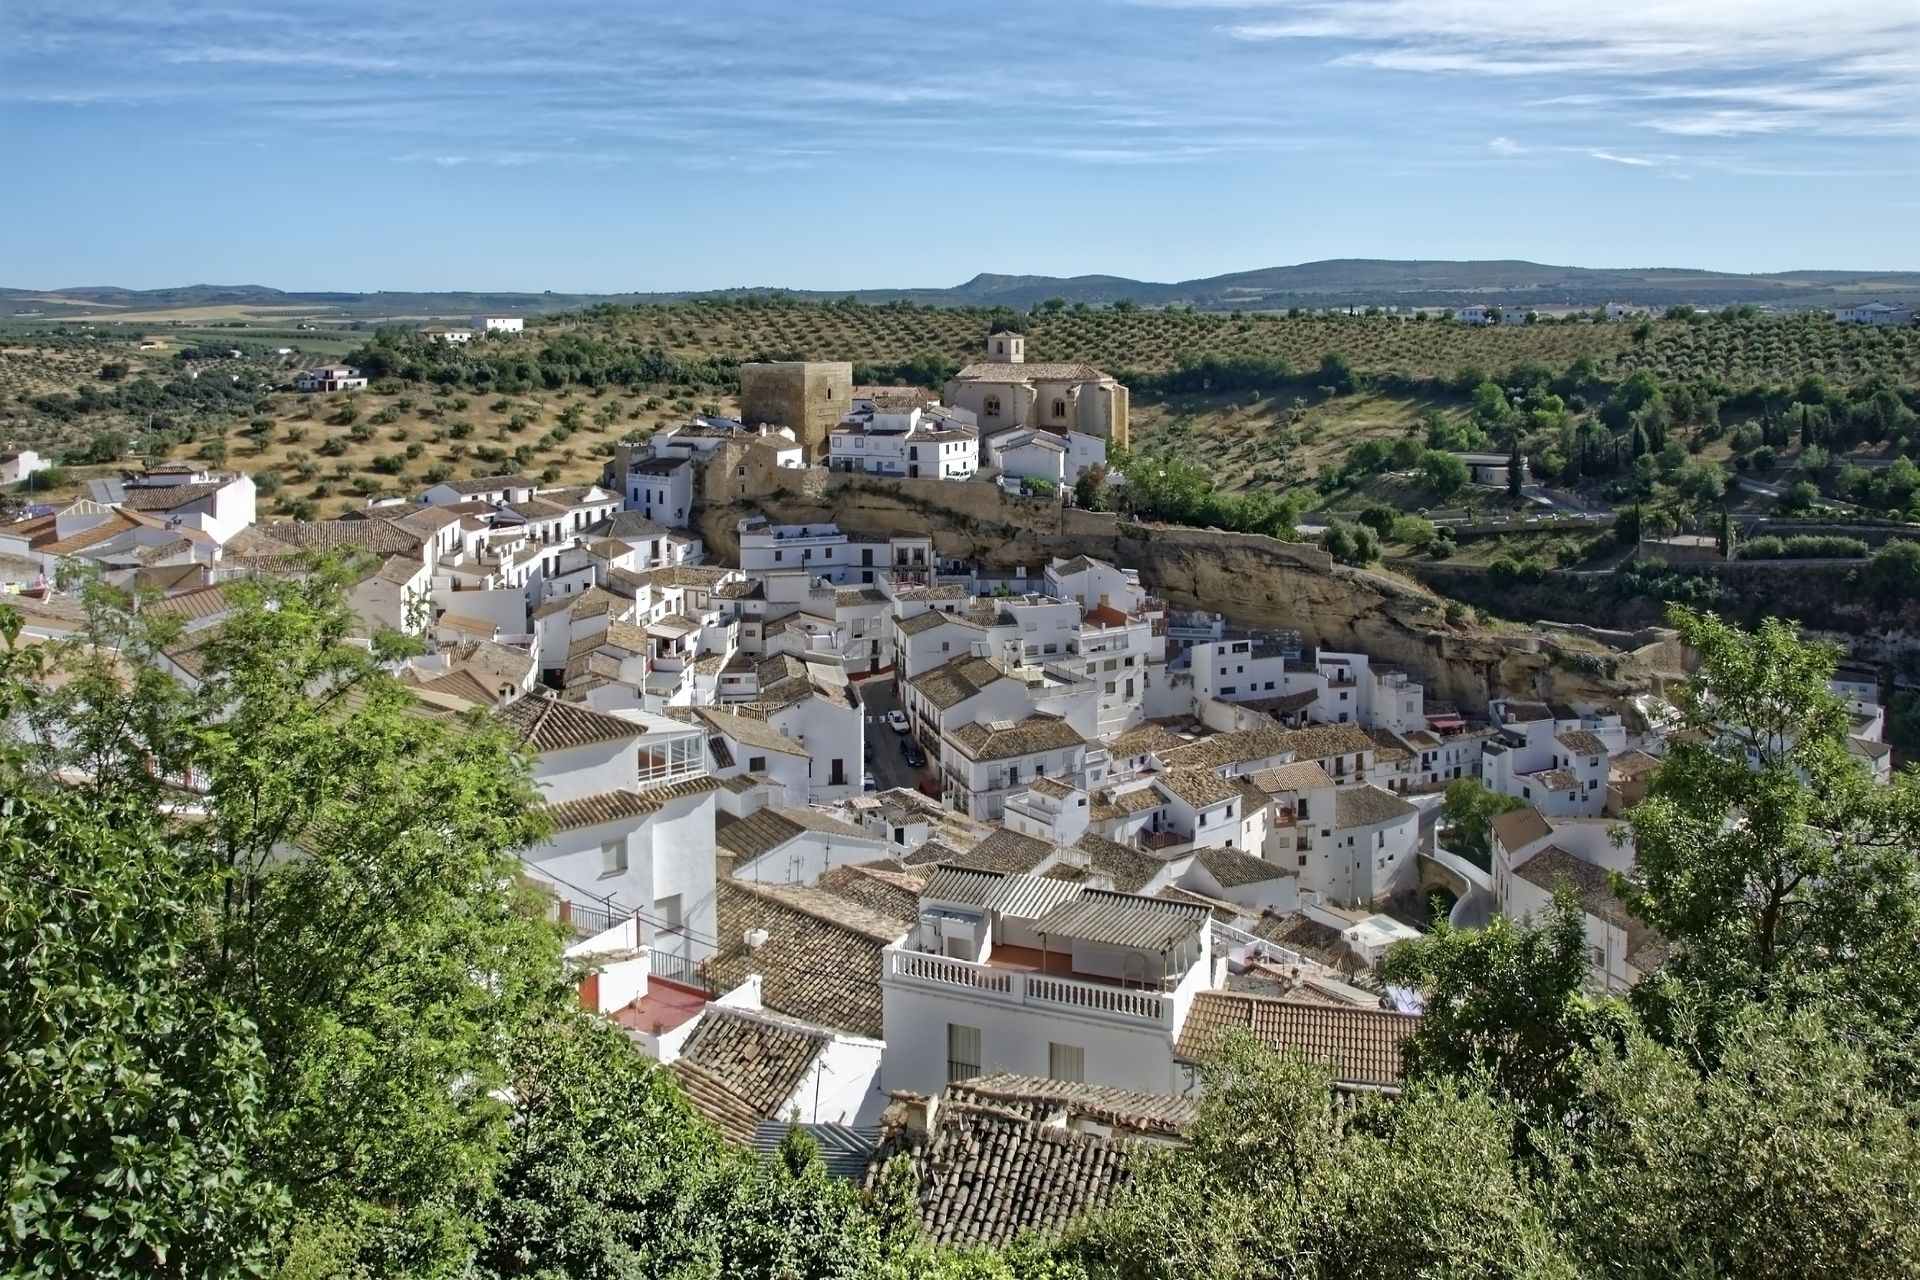 Wit dorpje in Zuid-Spanje - Autorondreis Andalusië